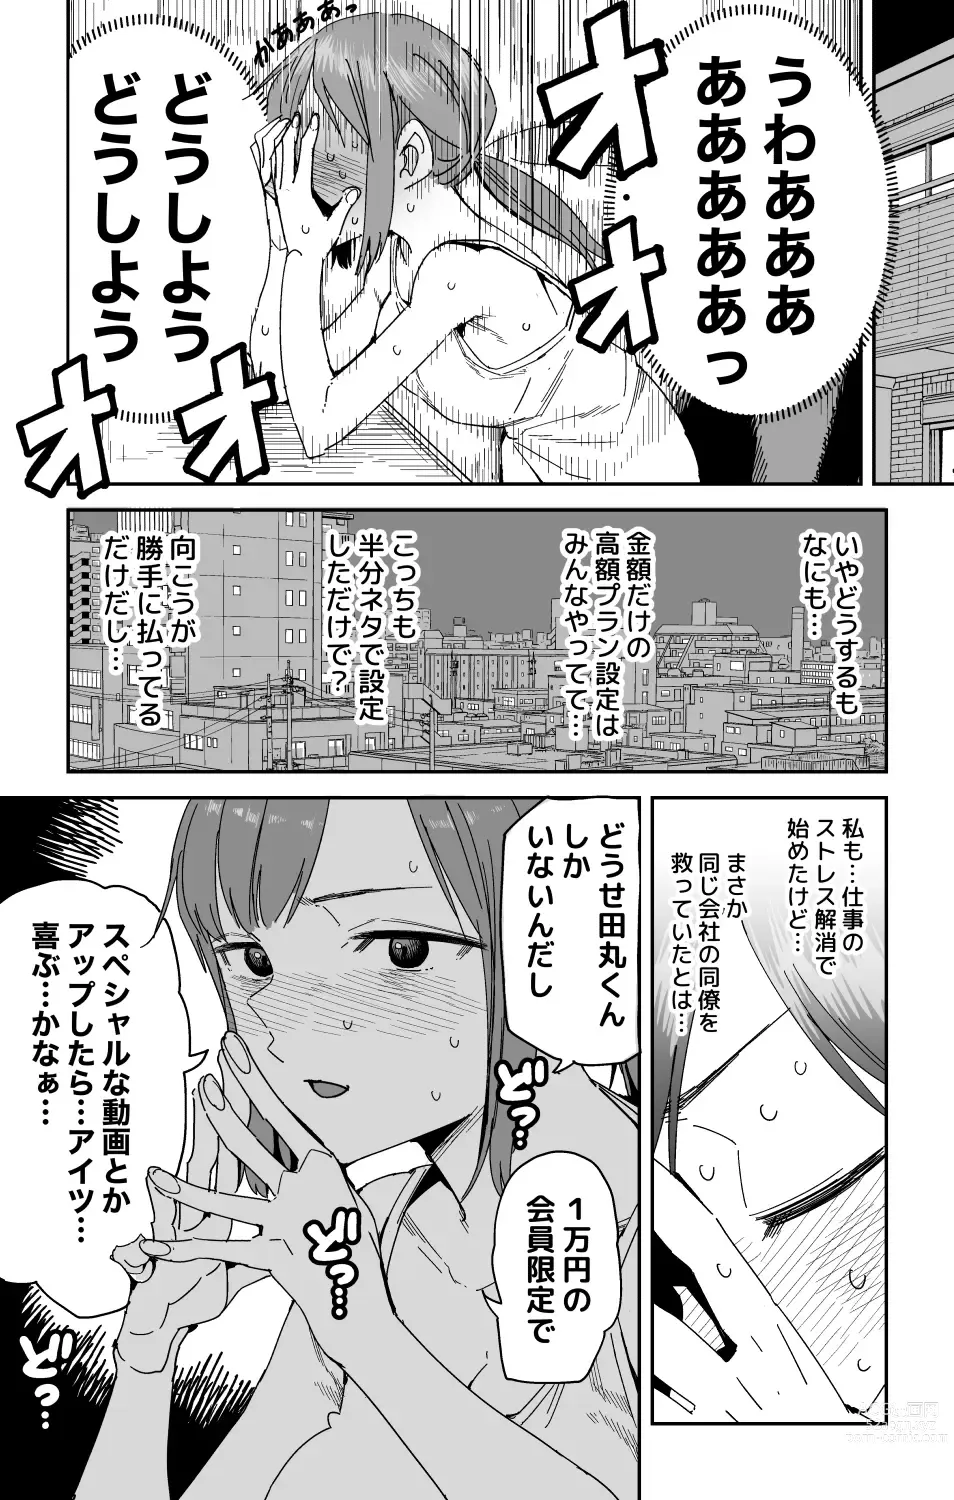 Page 6 of manga Saejima-san no Okurimono